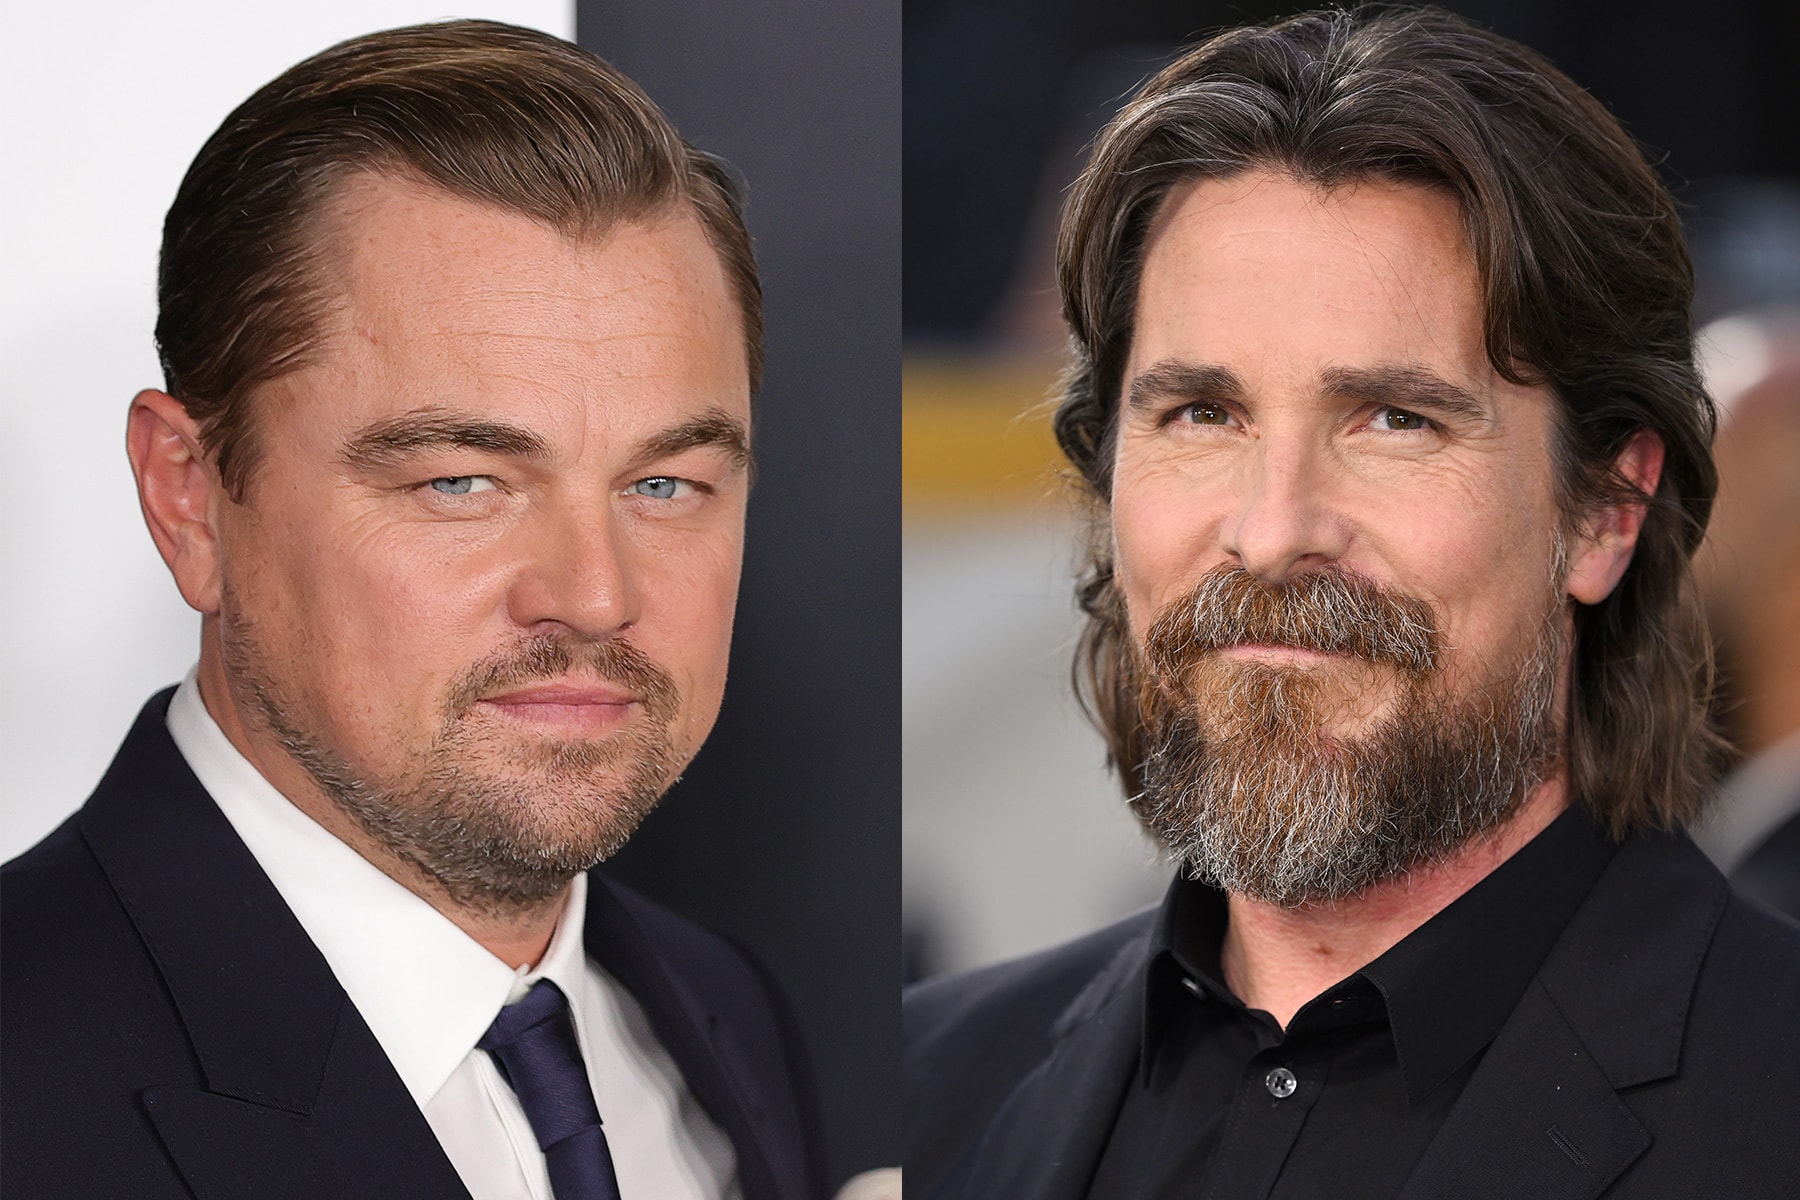 Christian Bale 談論 Leonardo DiCaprio 之於 Hollywood 的巨大影響力